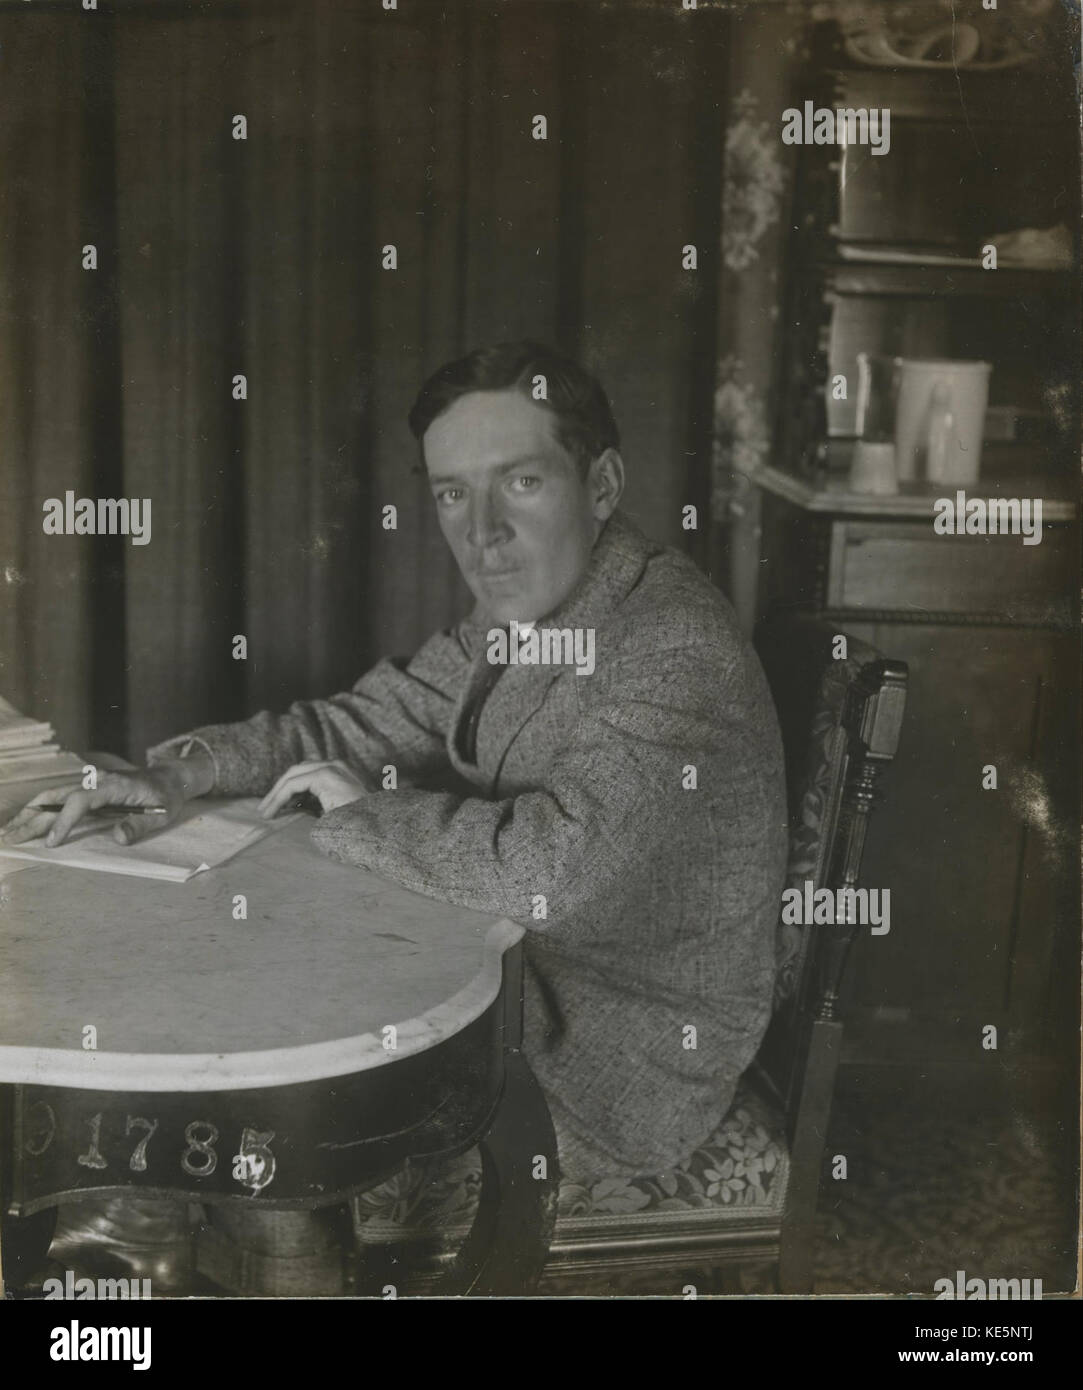 Artista no identificada Upton Beall Sinclair, Jr. Foto de stock